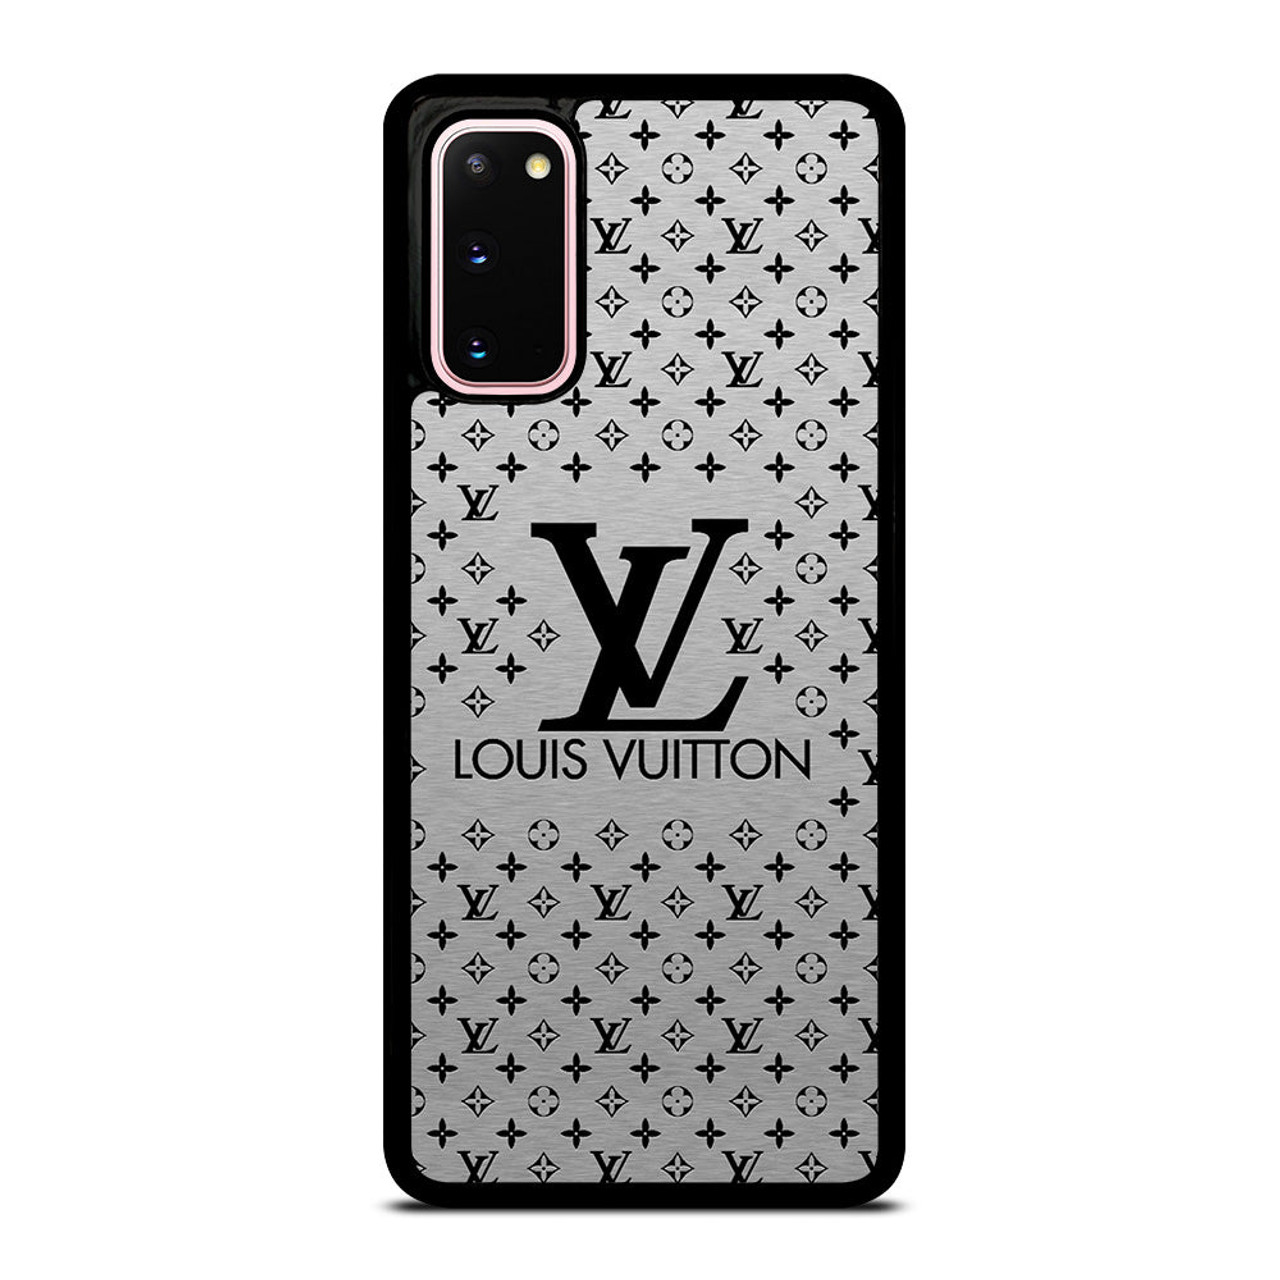 LOUIS VUITTON 1 Samsung Galaxy S20 Plus Case Cover